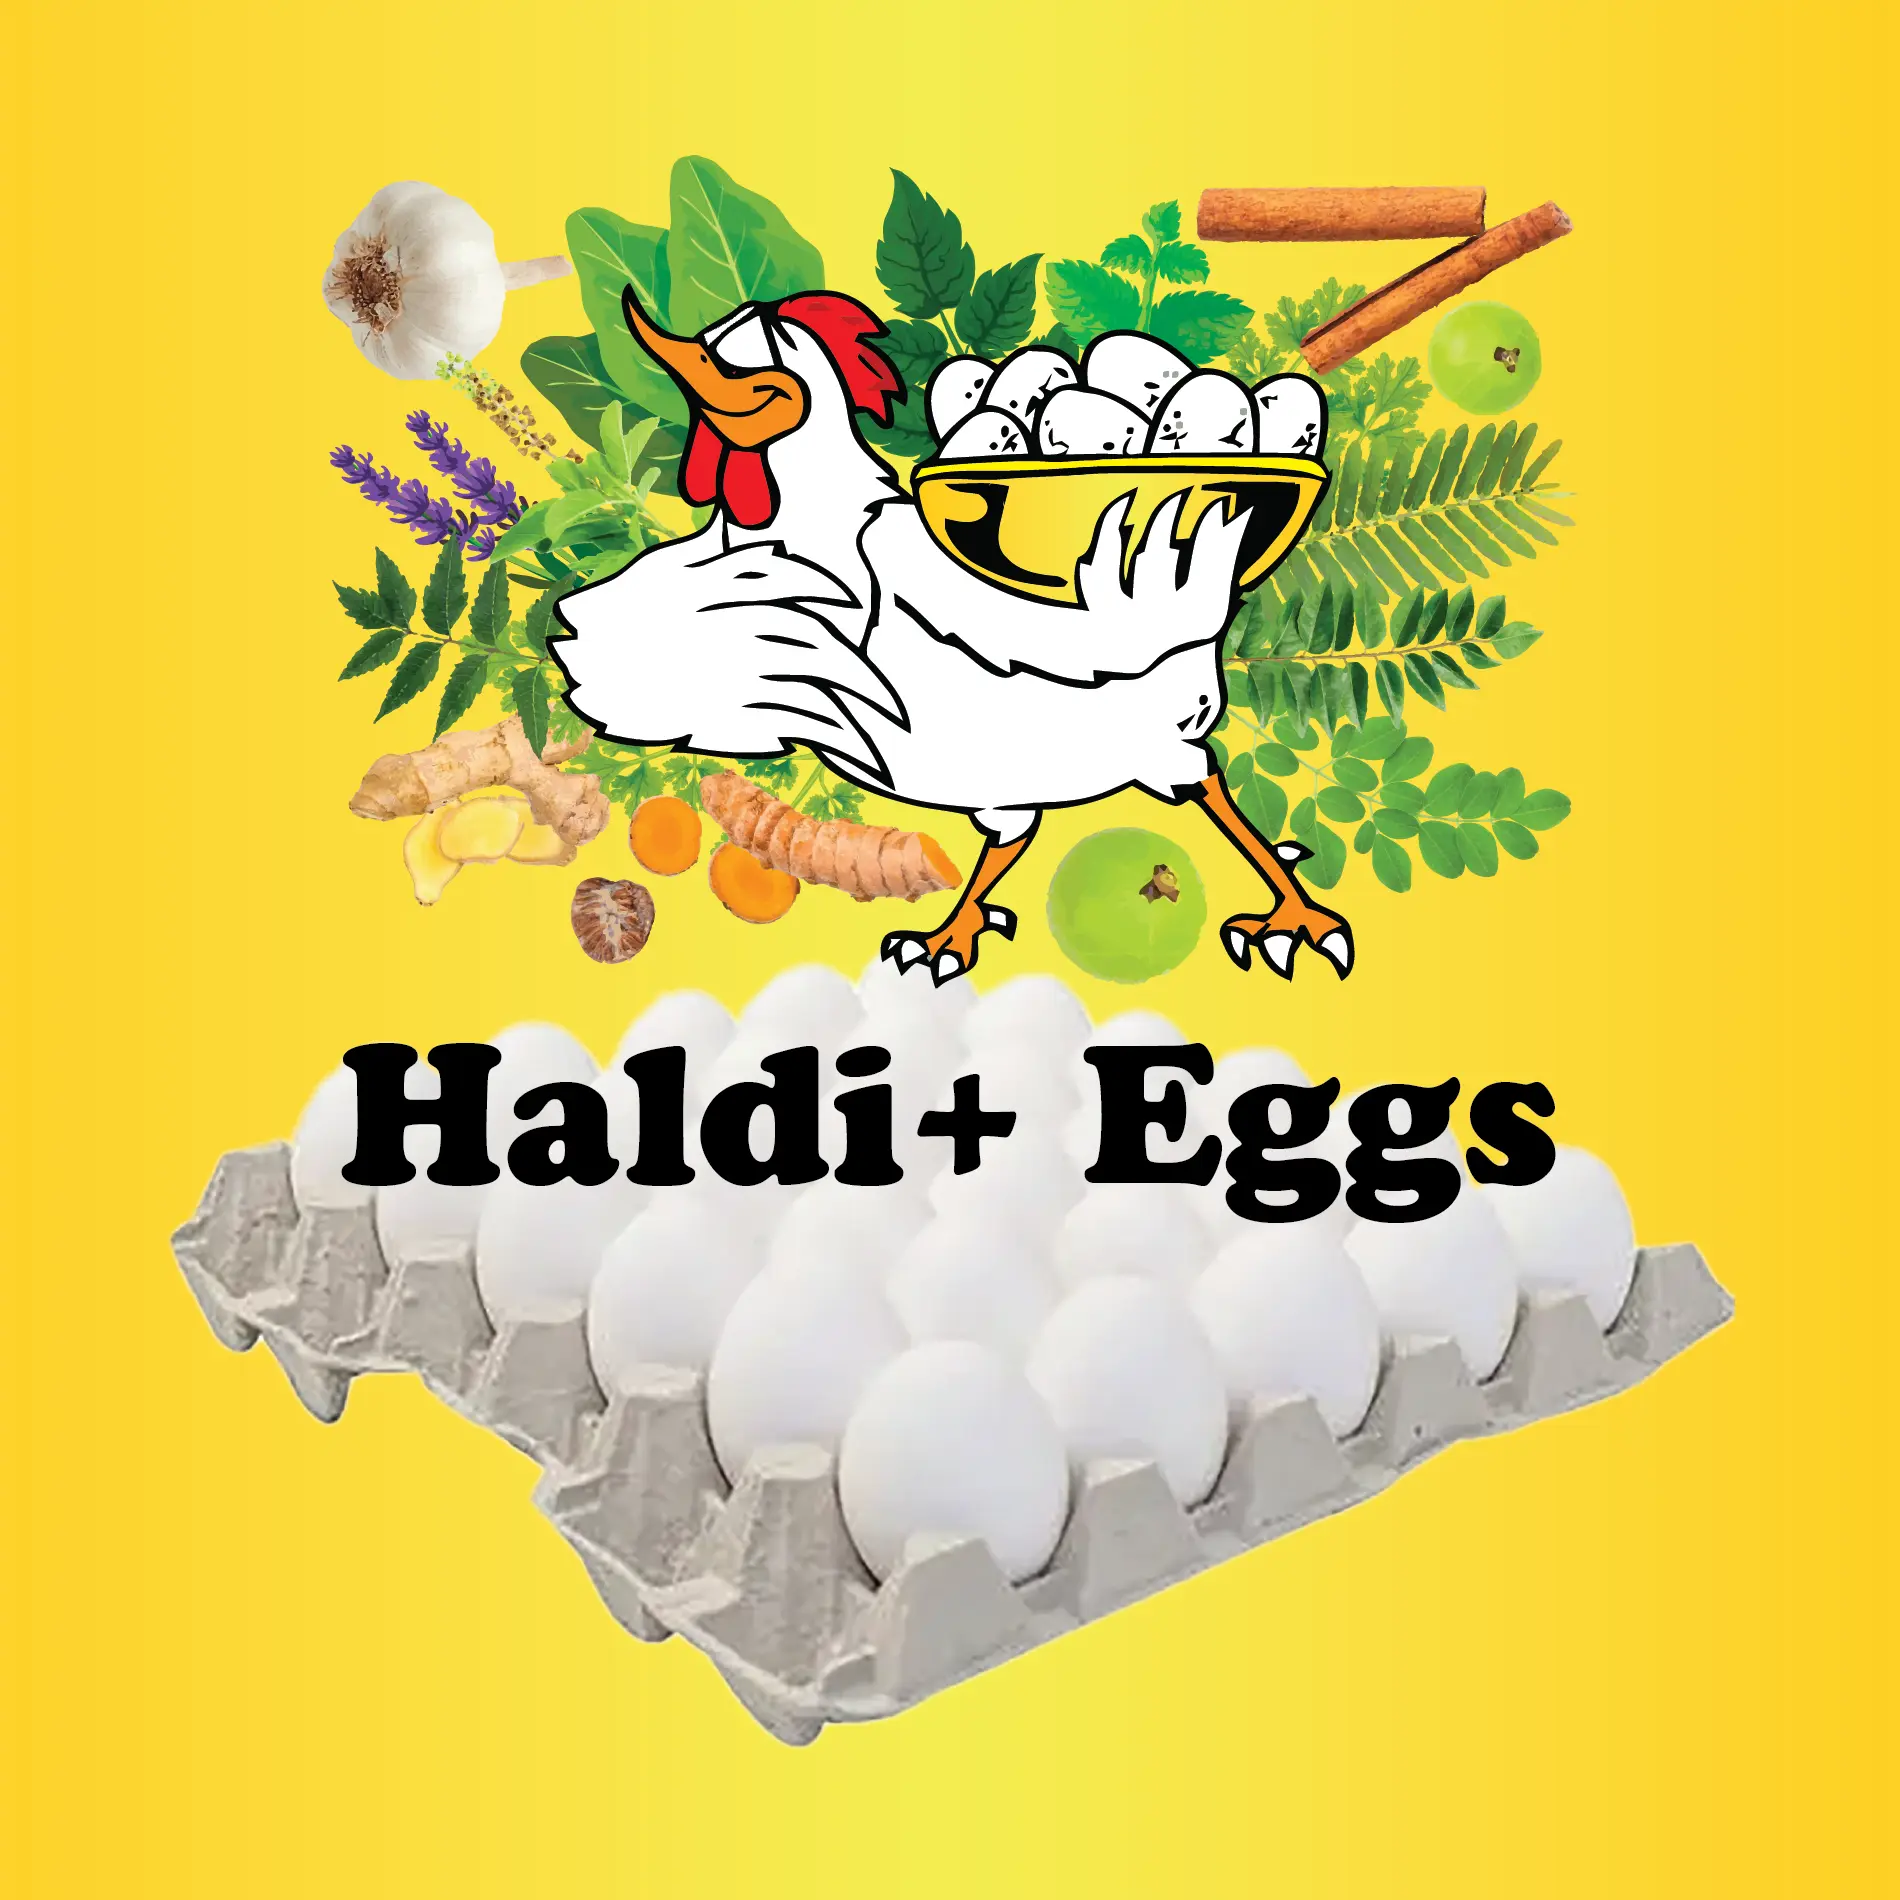 Haldi+ Egg 30 pack